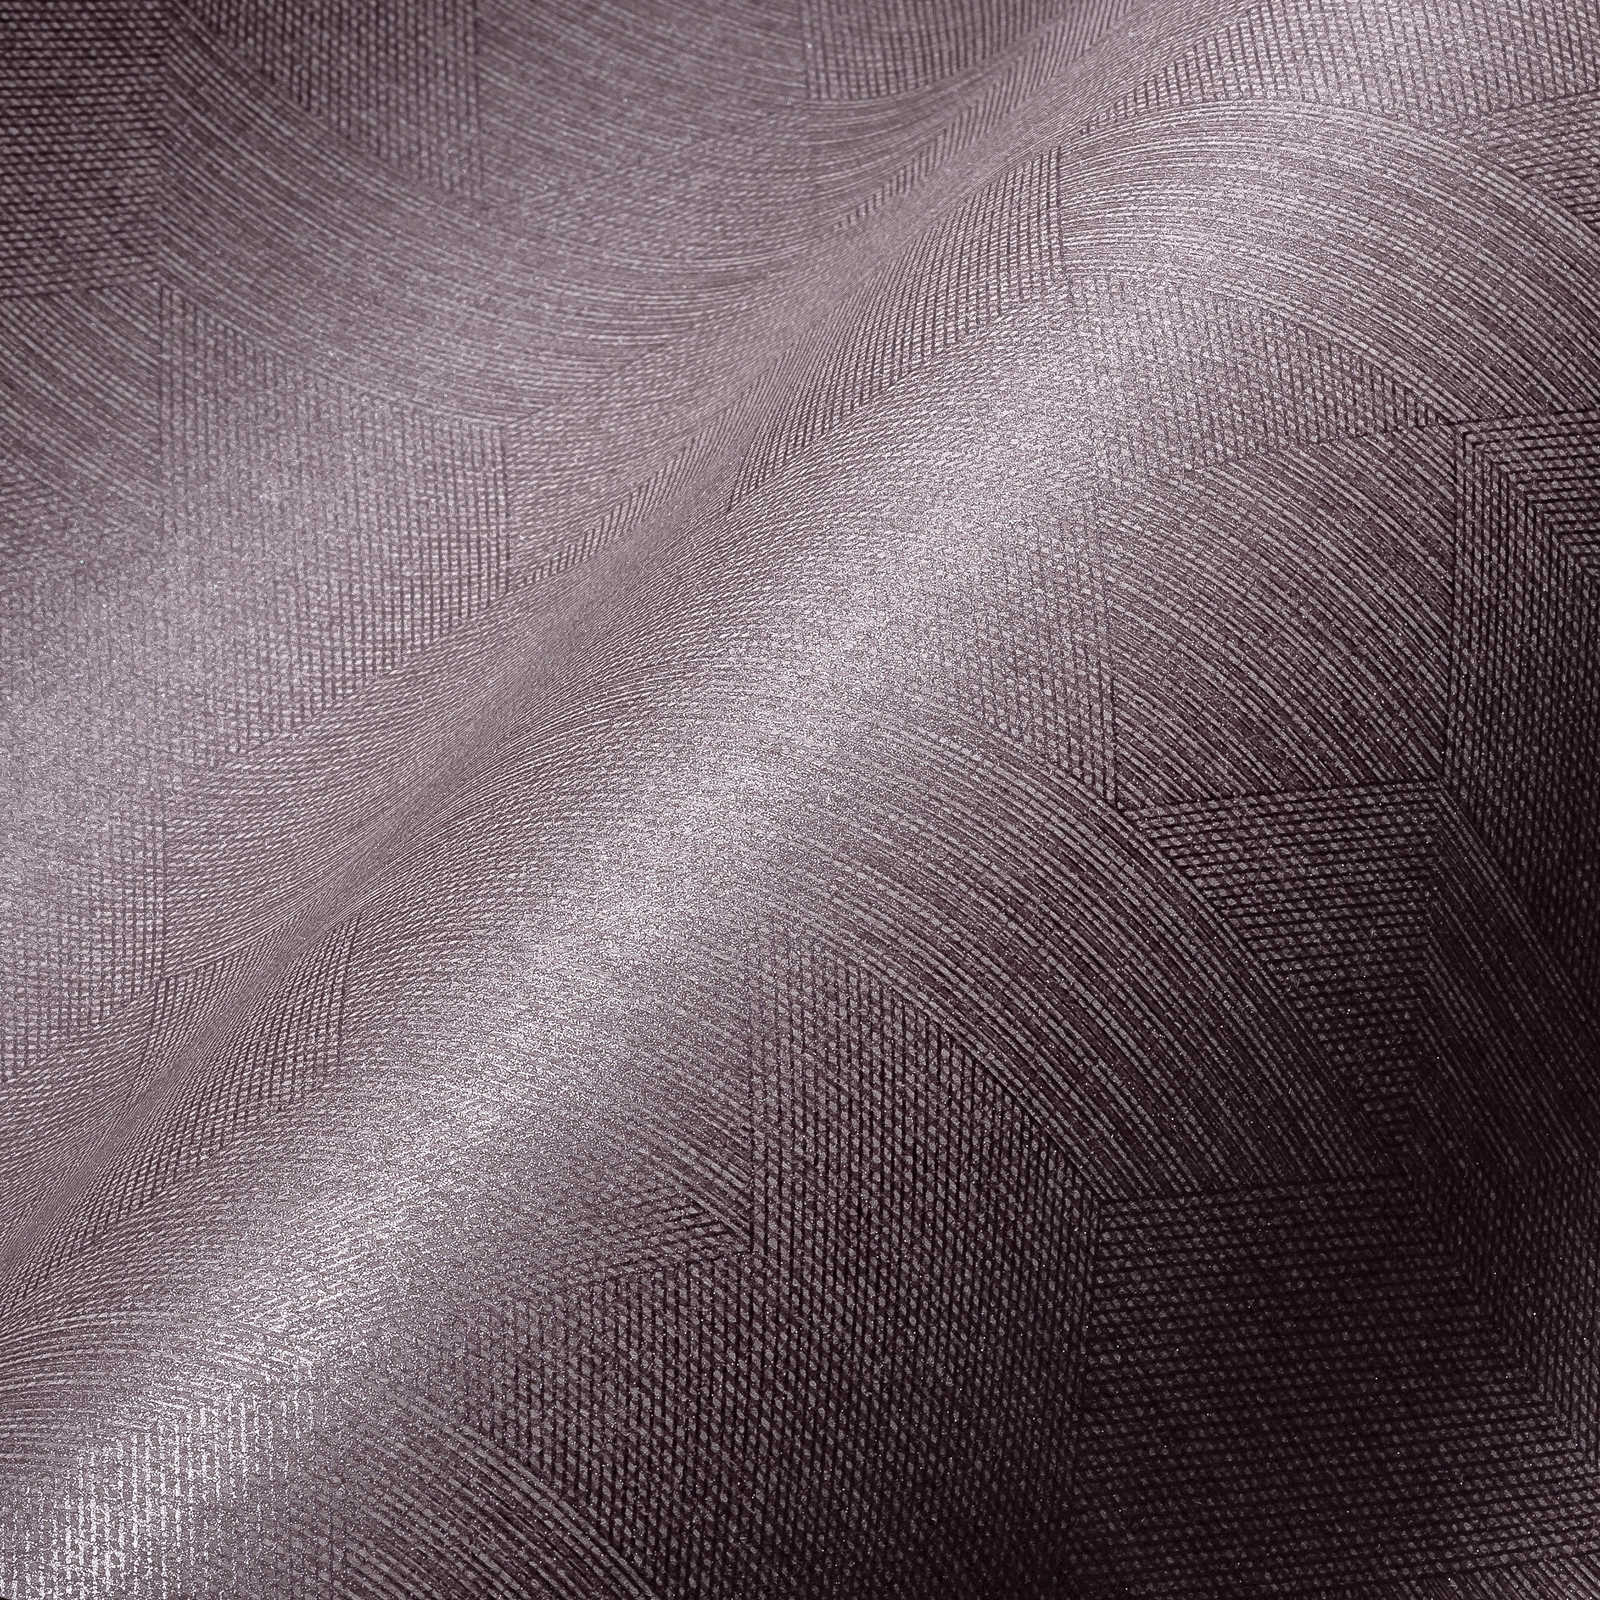             Papel pintado púrpura con motivos tono sobre tono en estilo gráfico - Púrpura, Gris
        